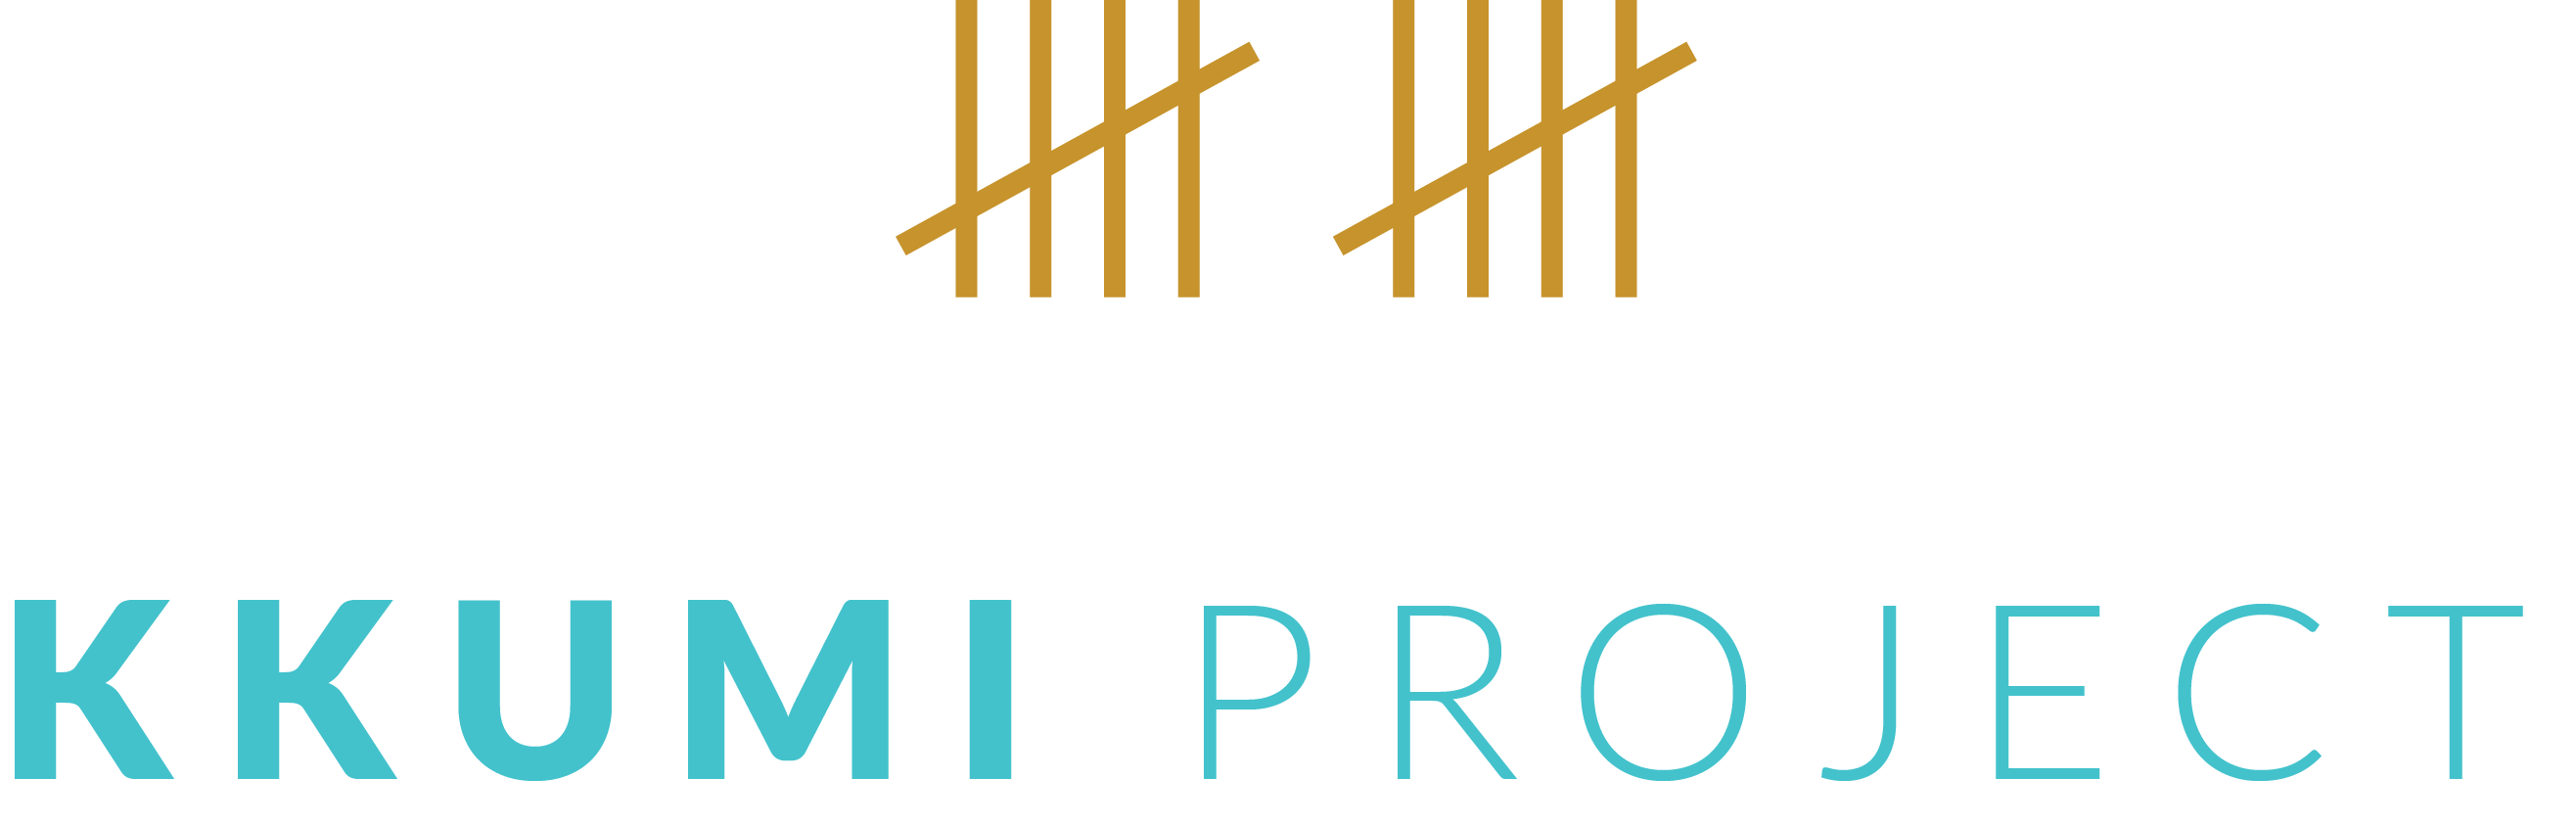 Kkumi Project logo